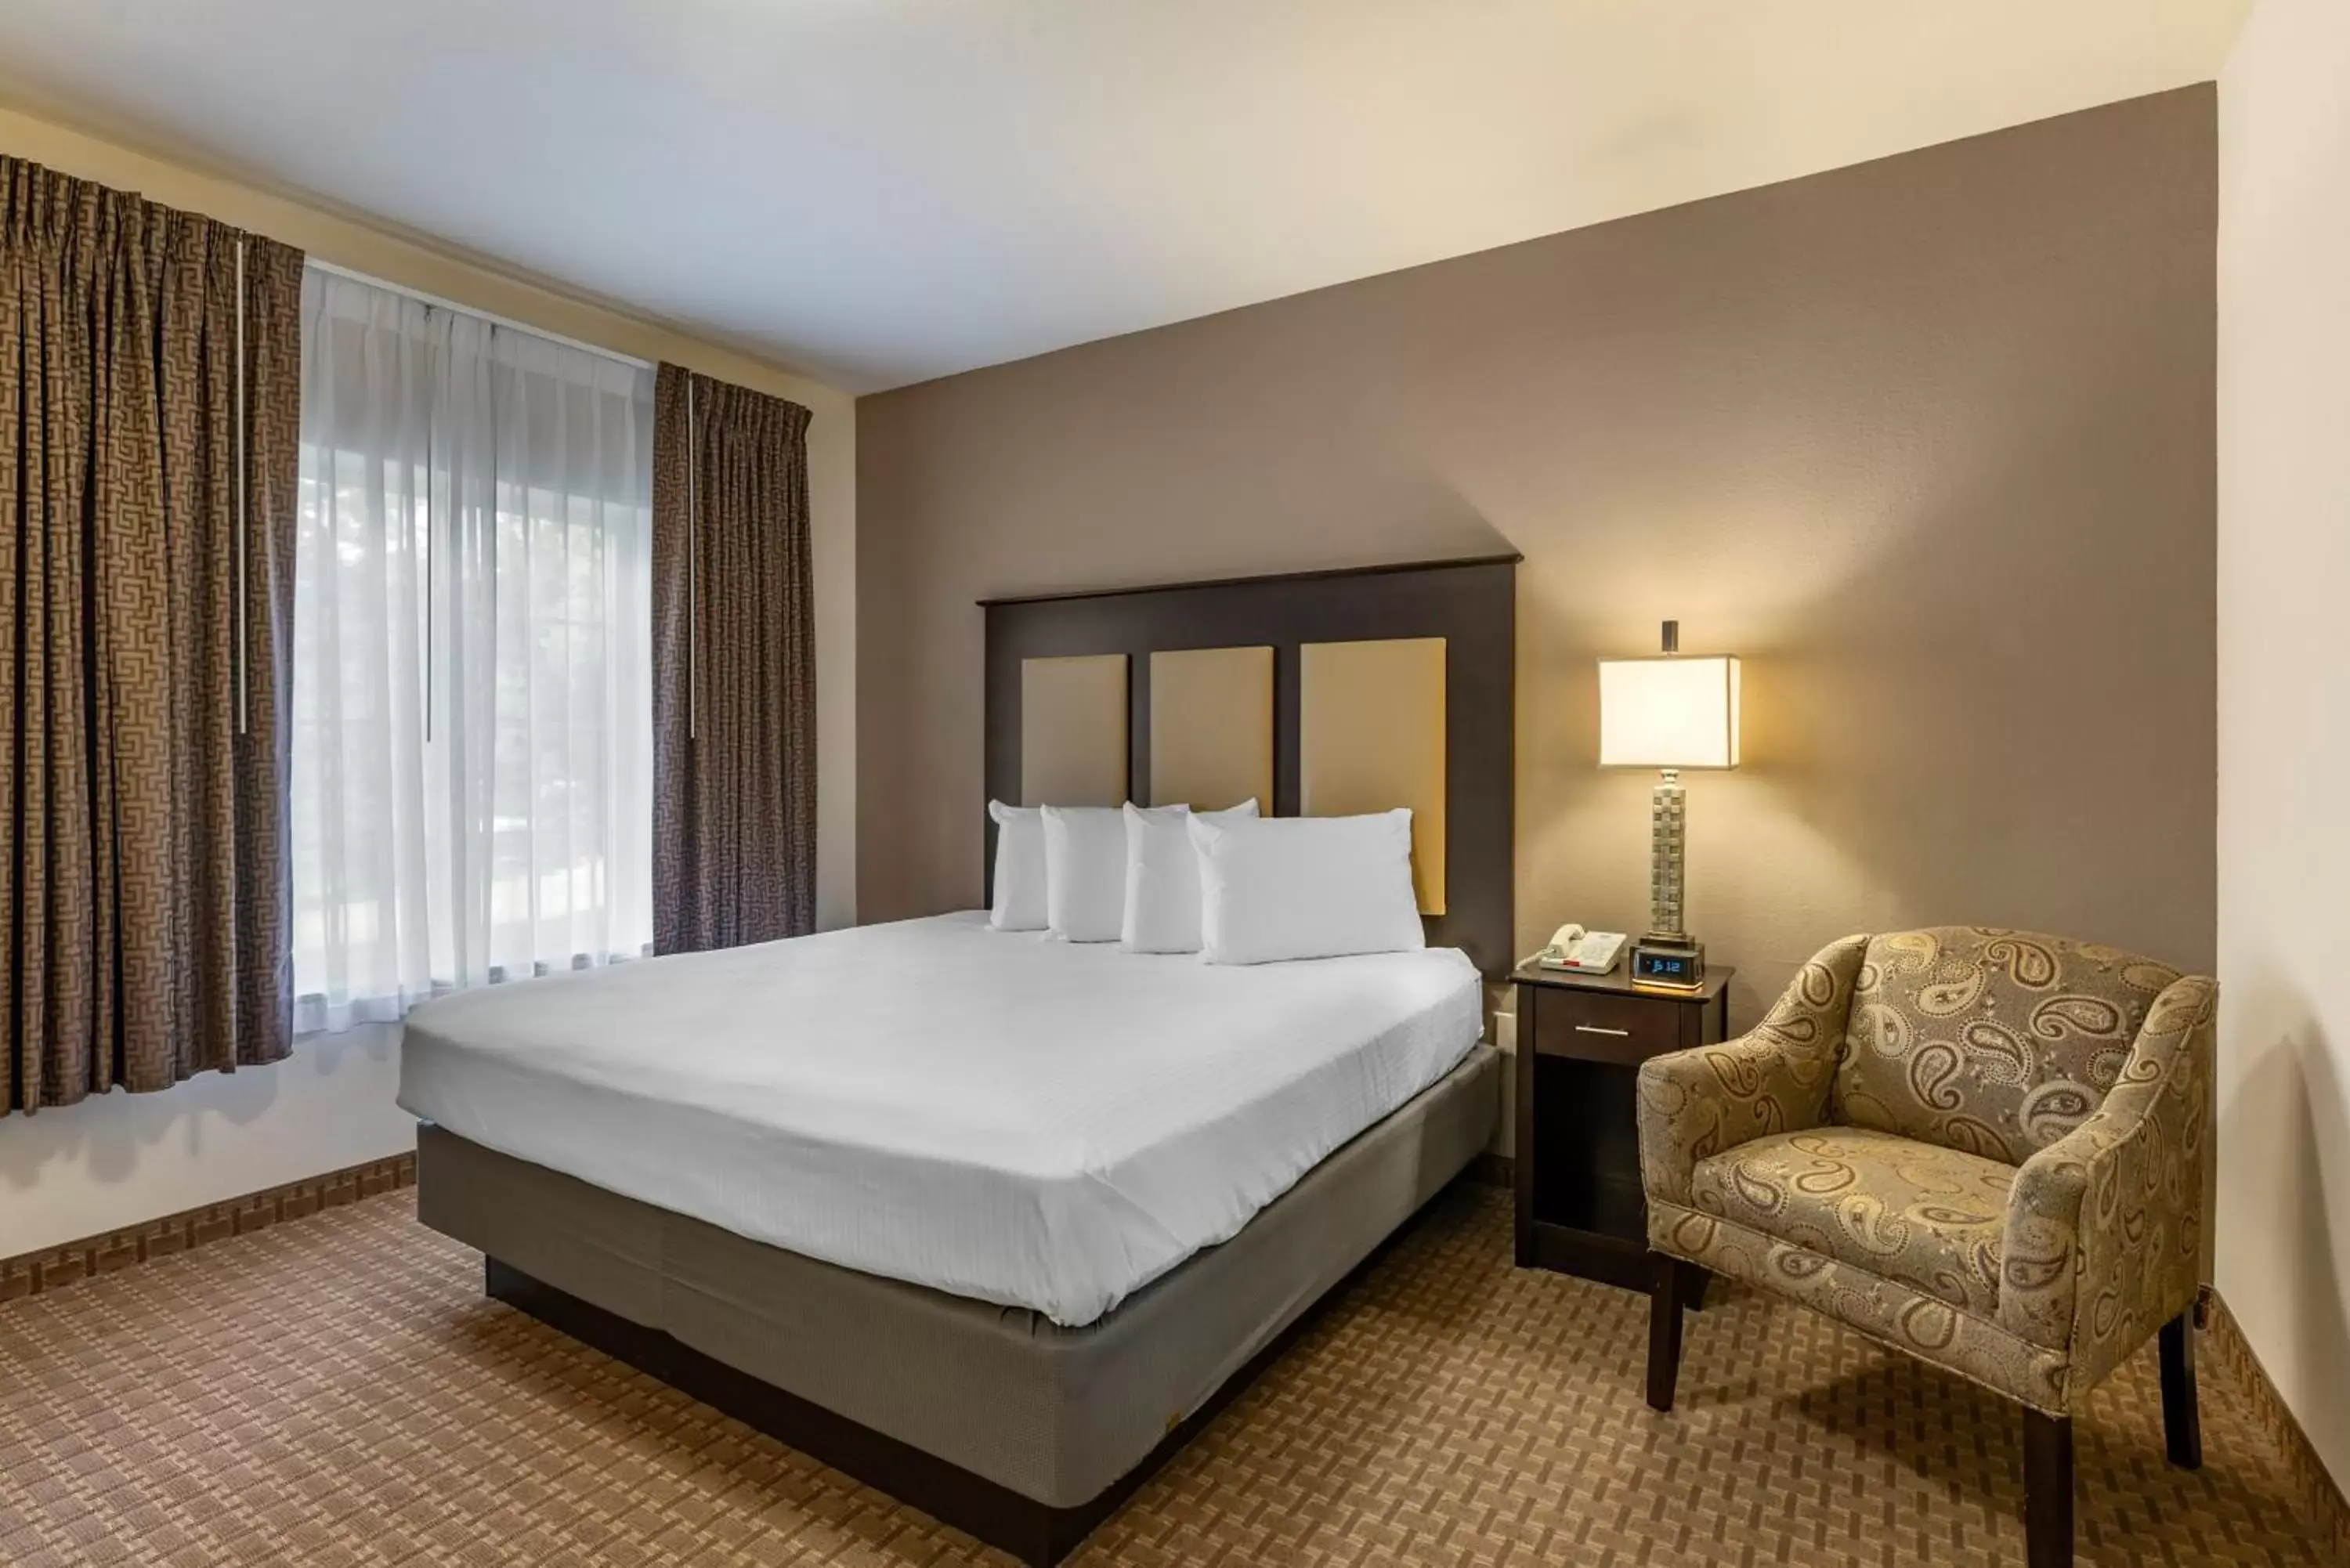 Bedroom in Stay-Over Suites - Fort Gregg-Adams Area